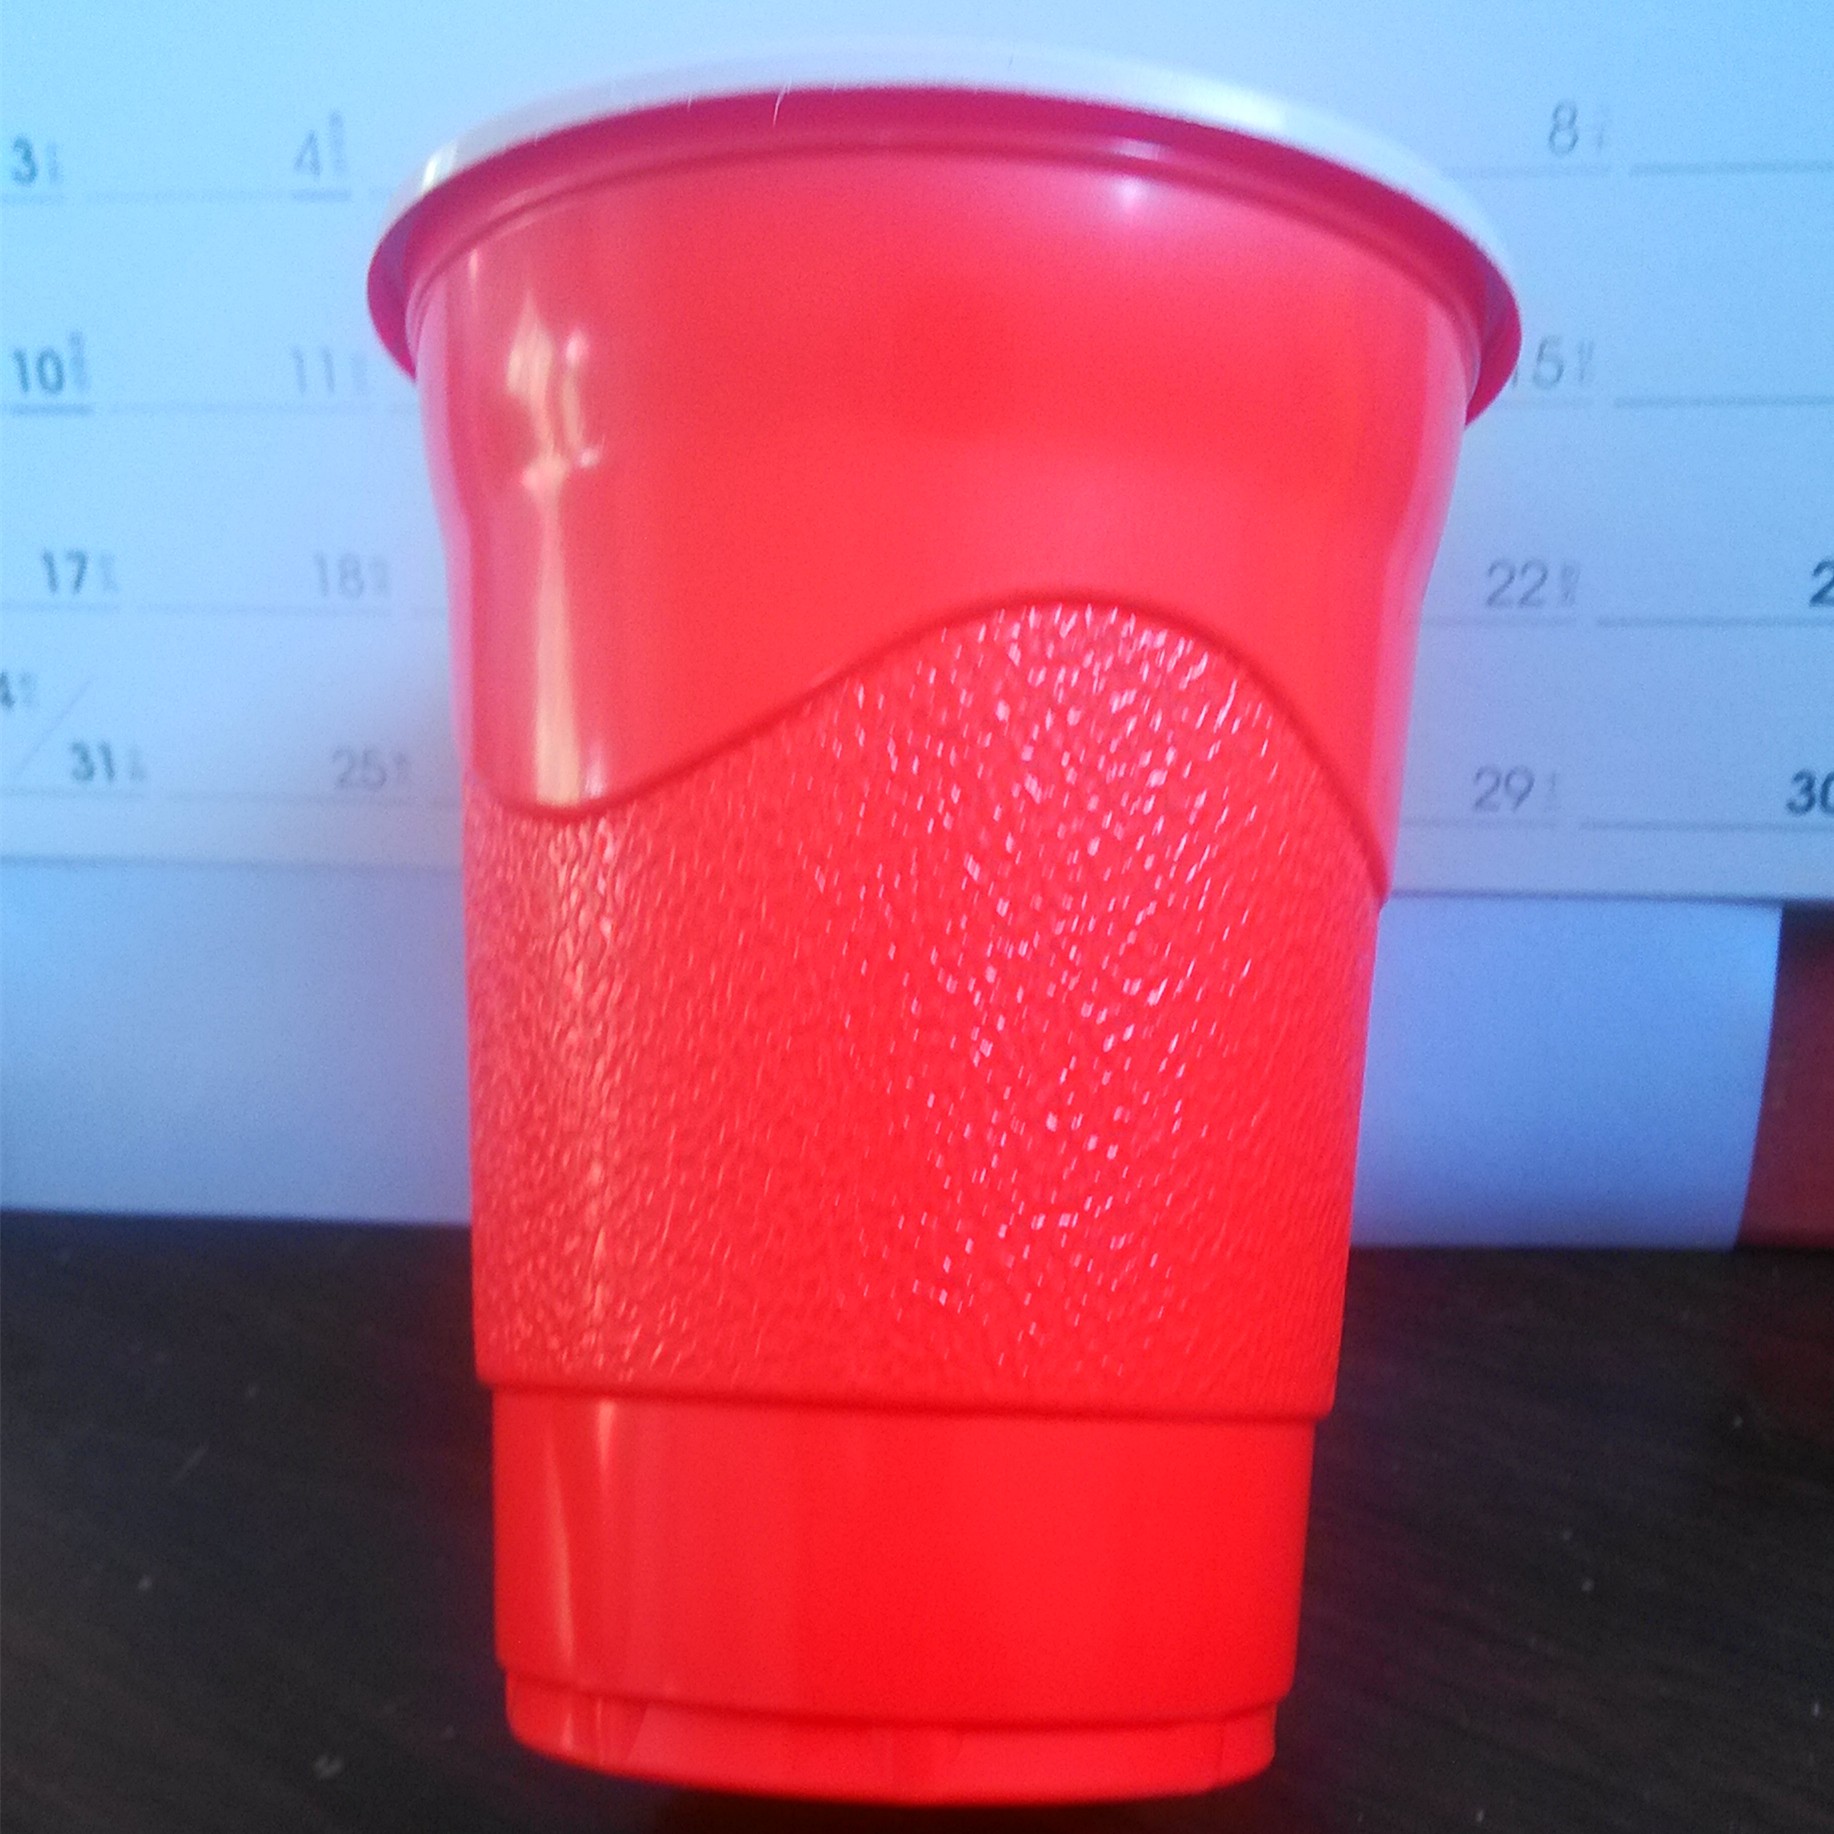 16oz麻点杯，一次性塑料ps杯供应16oz麻点杯，一次性塑料ps杯，红白双色杯